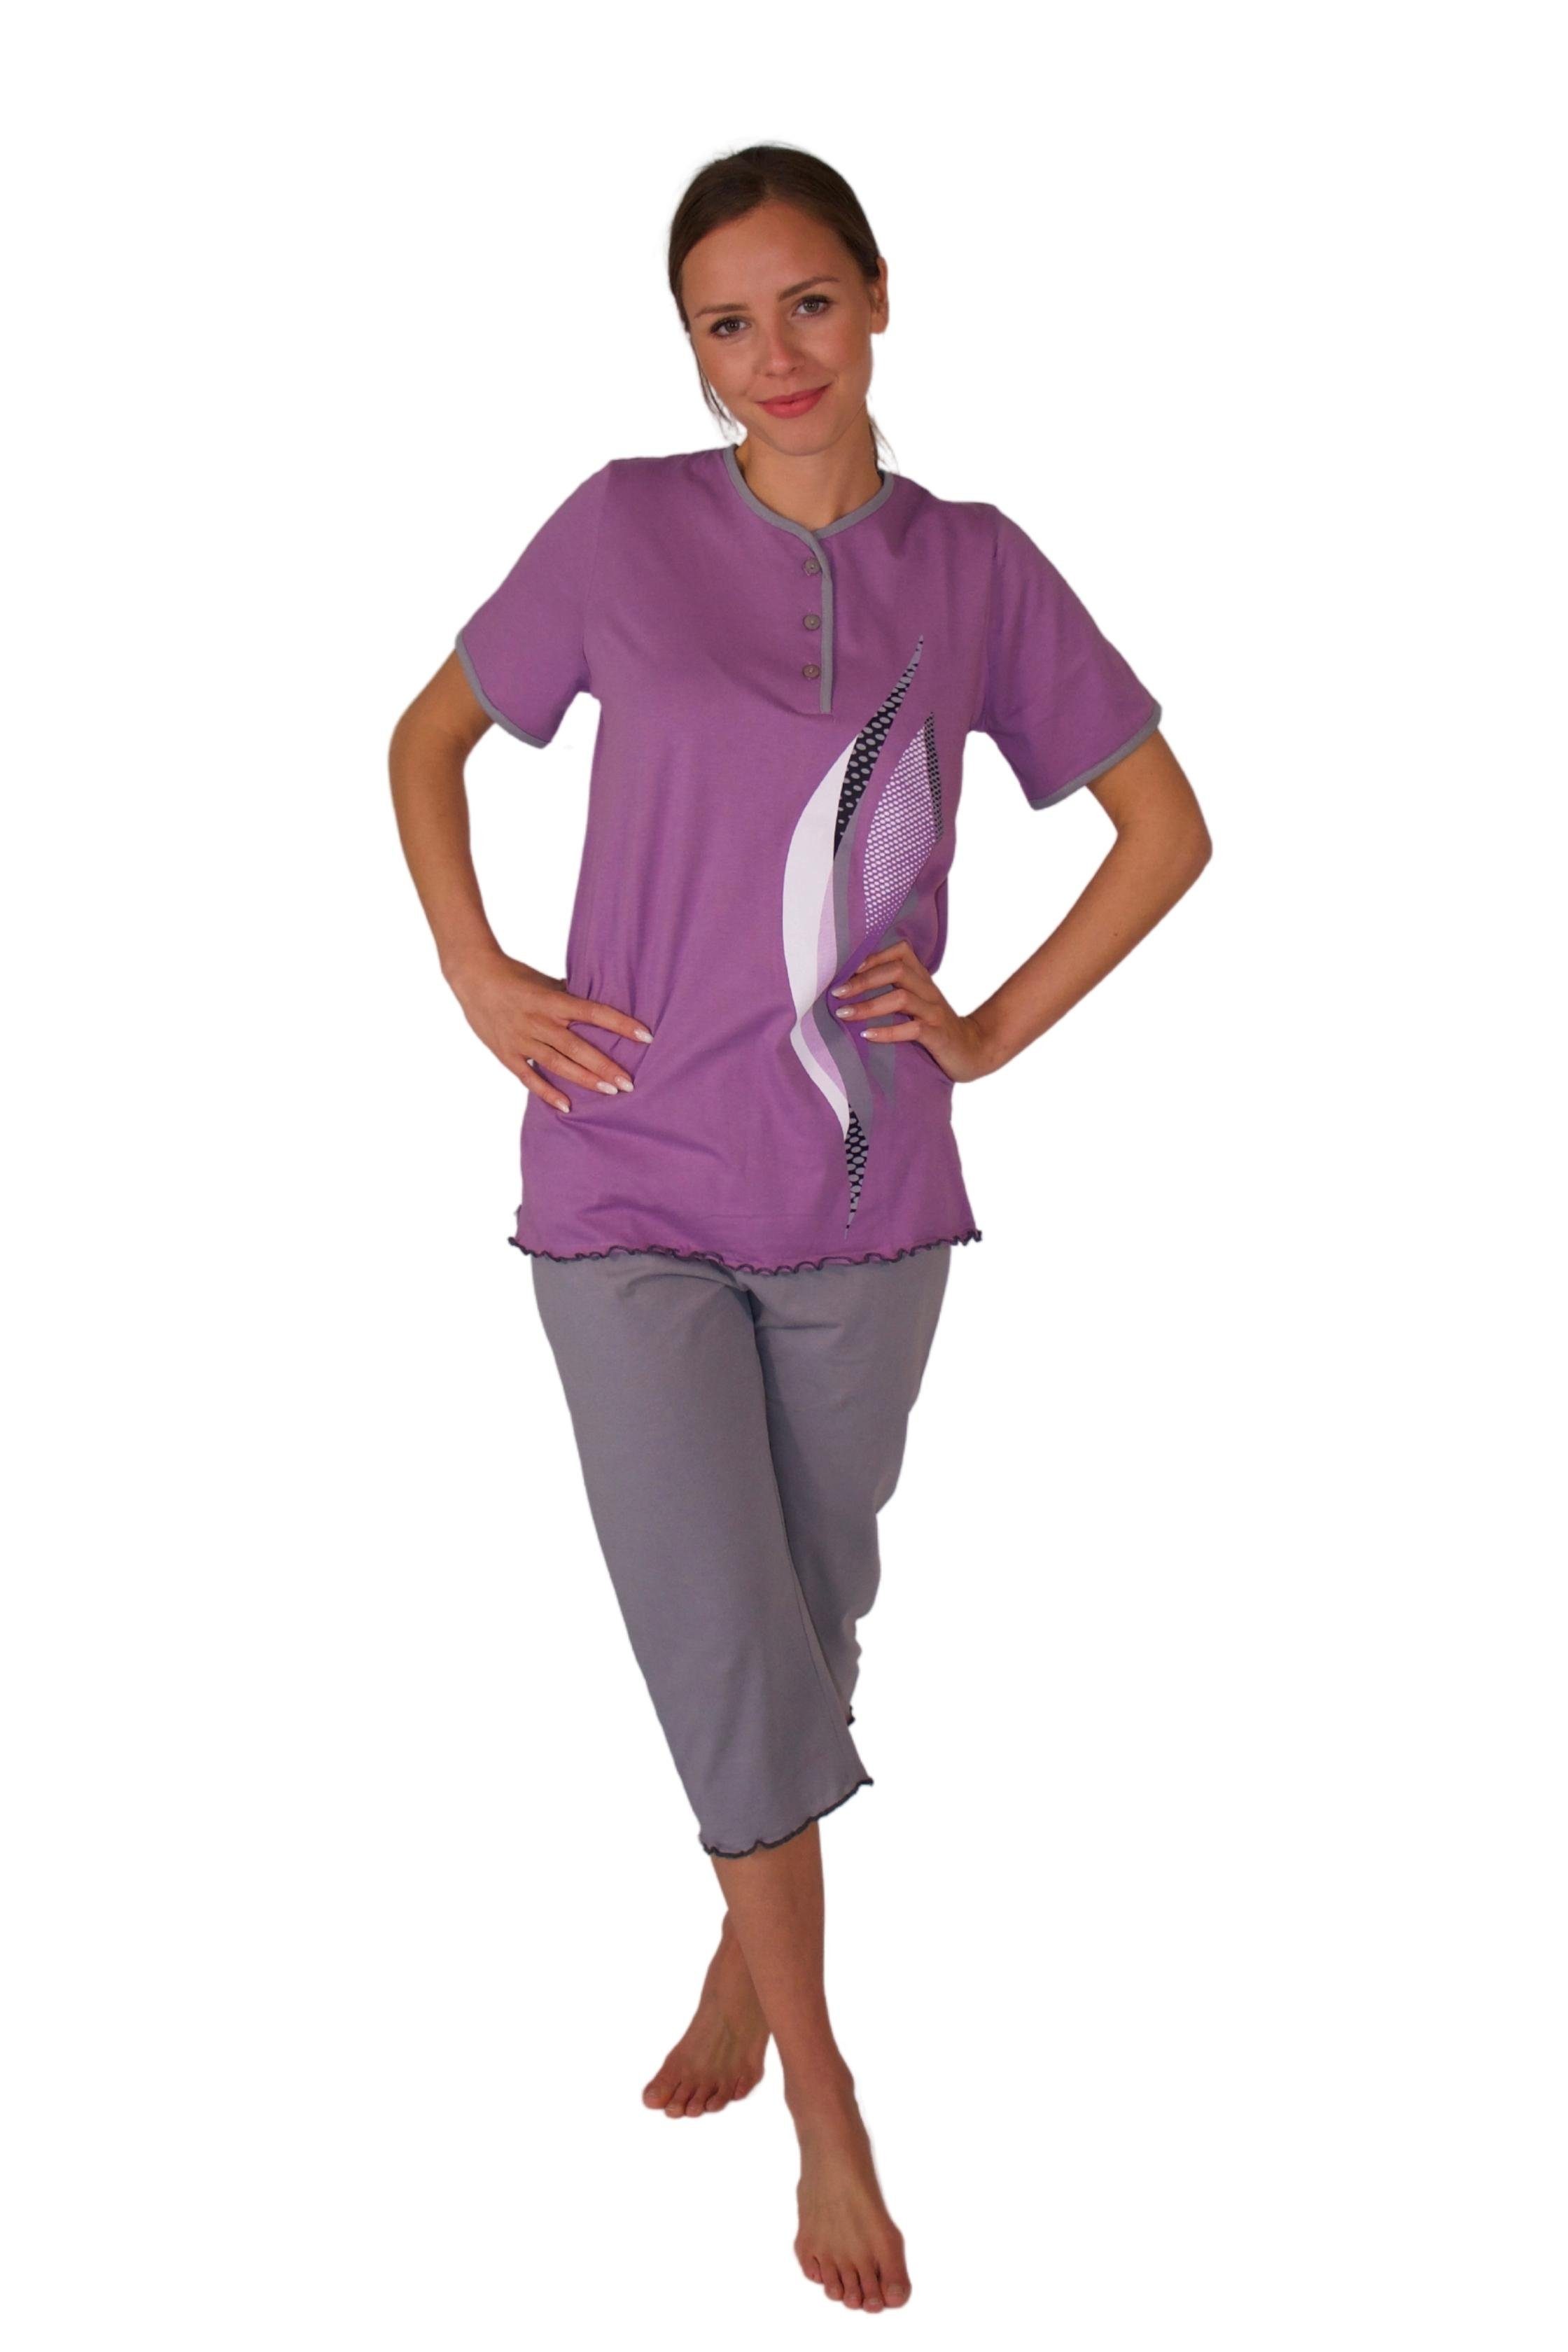 Wäsche/Bademode Pyjamas Consult-Tex Capri-Pyjama Damen Capri Schlafanzug Pyjama (1 Set) Oberteil mit Knopfleiste und Motivdruck